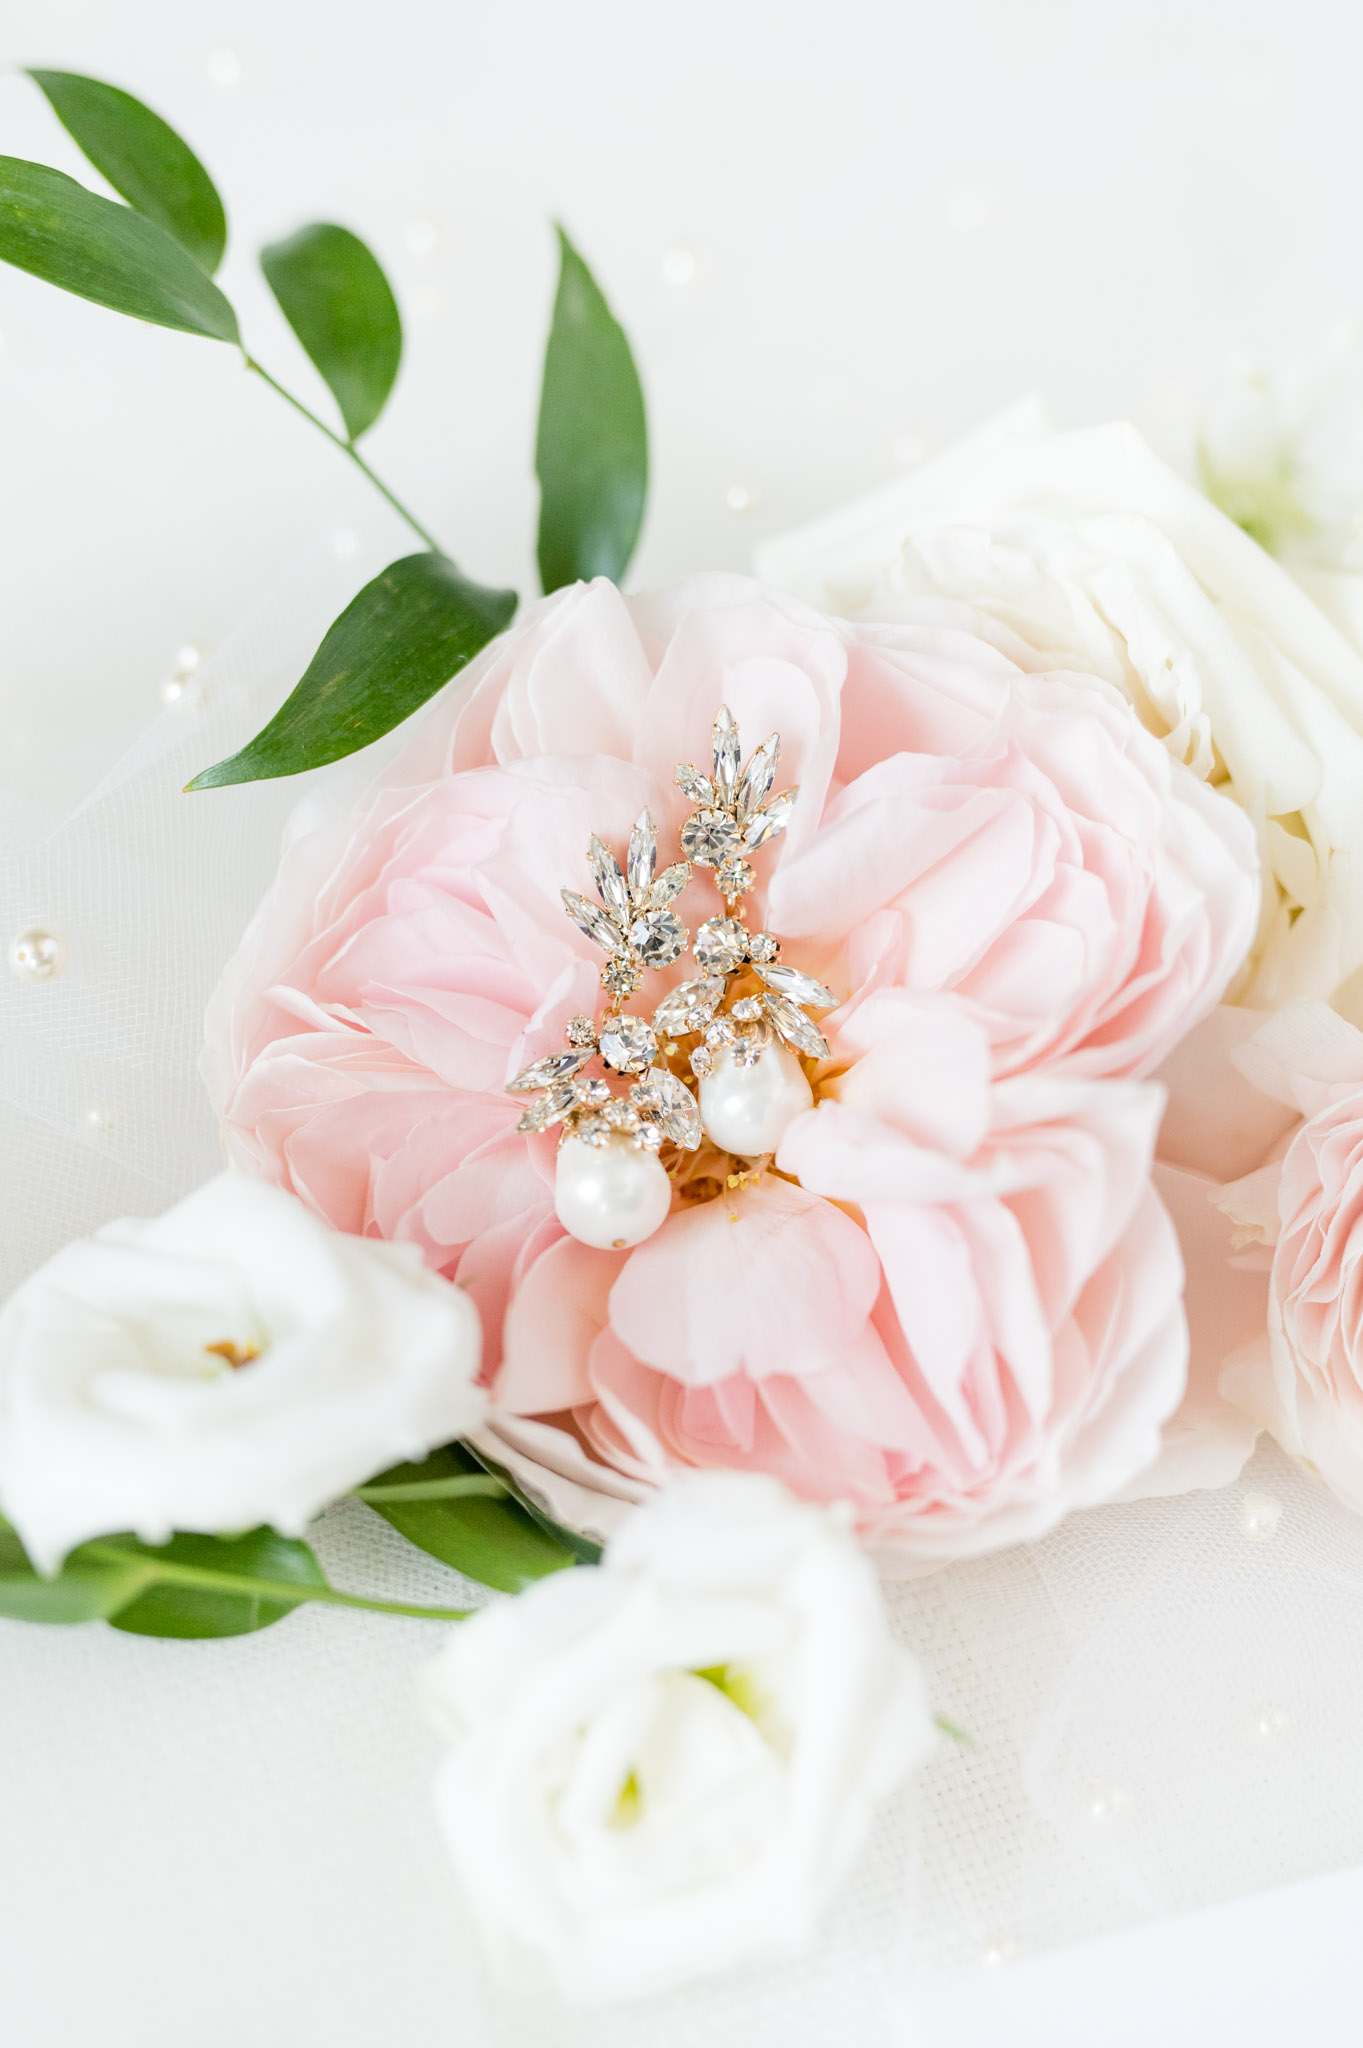 The bride's earrings sit on flowers.